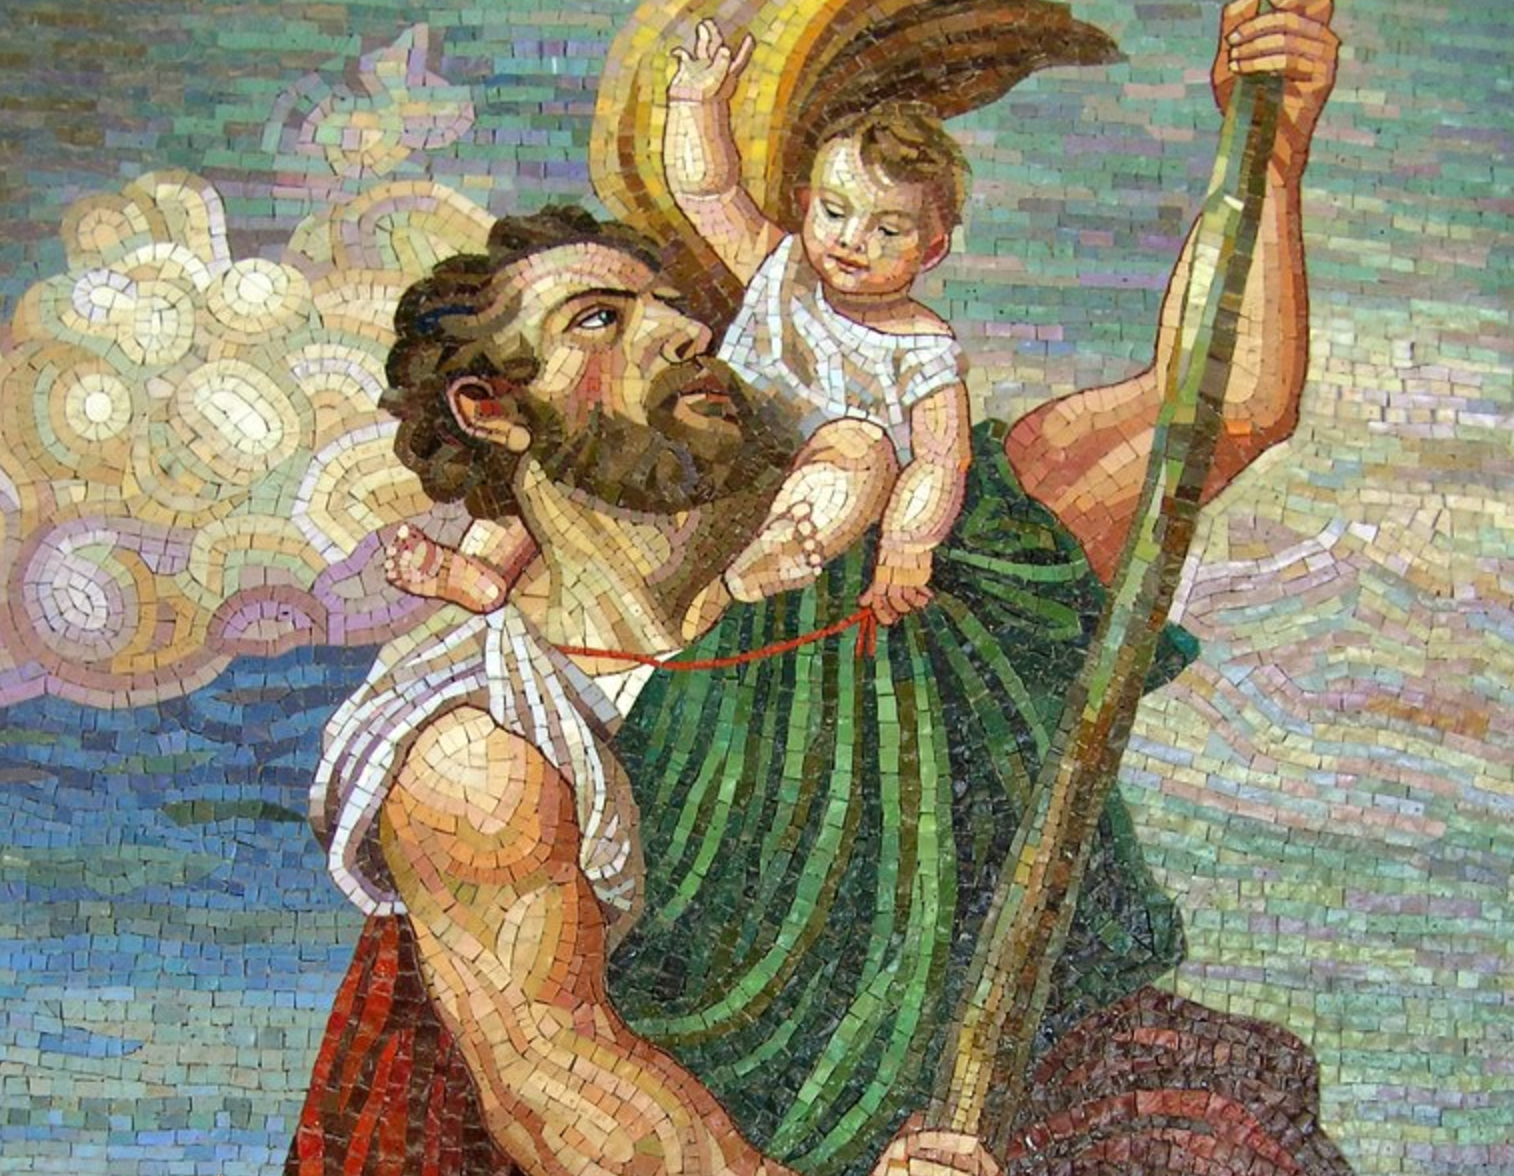 Saint Christopher carrying Christ child.